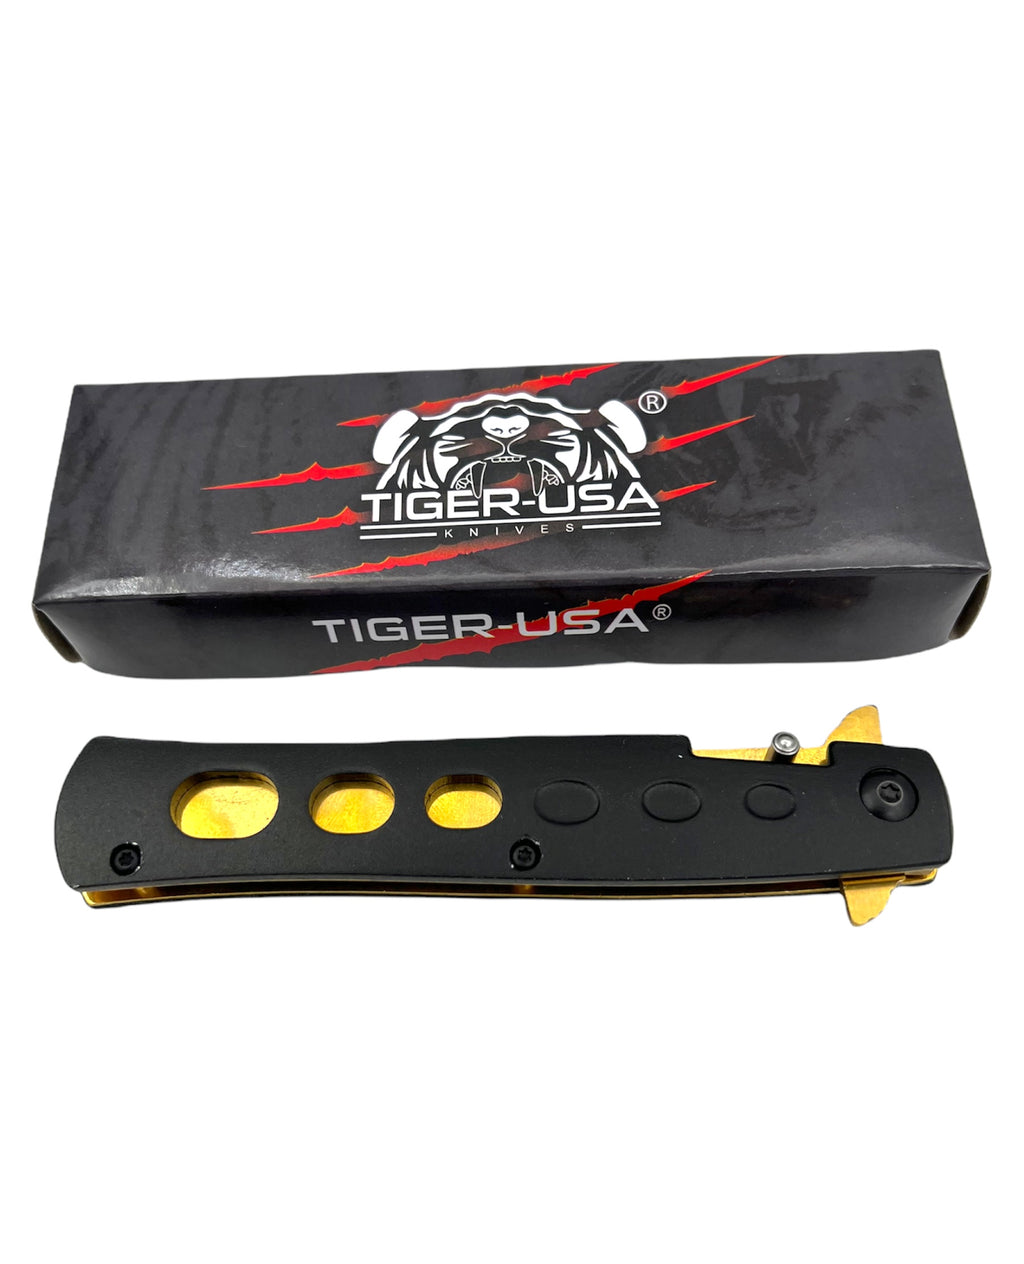 Tiger-USA® folding BLACK and GOLD knife